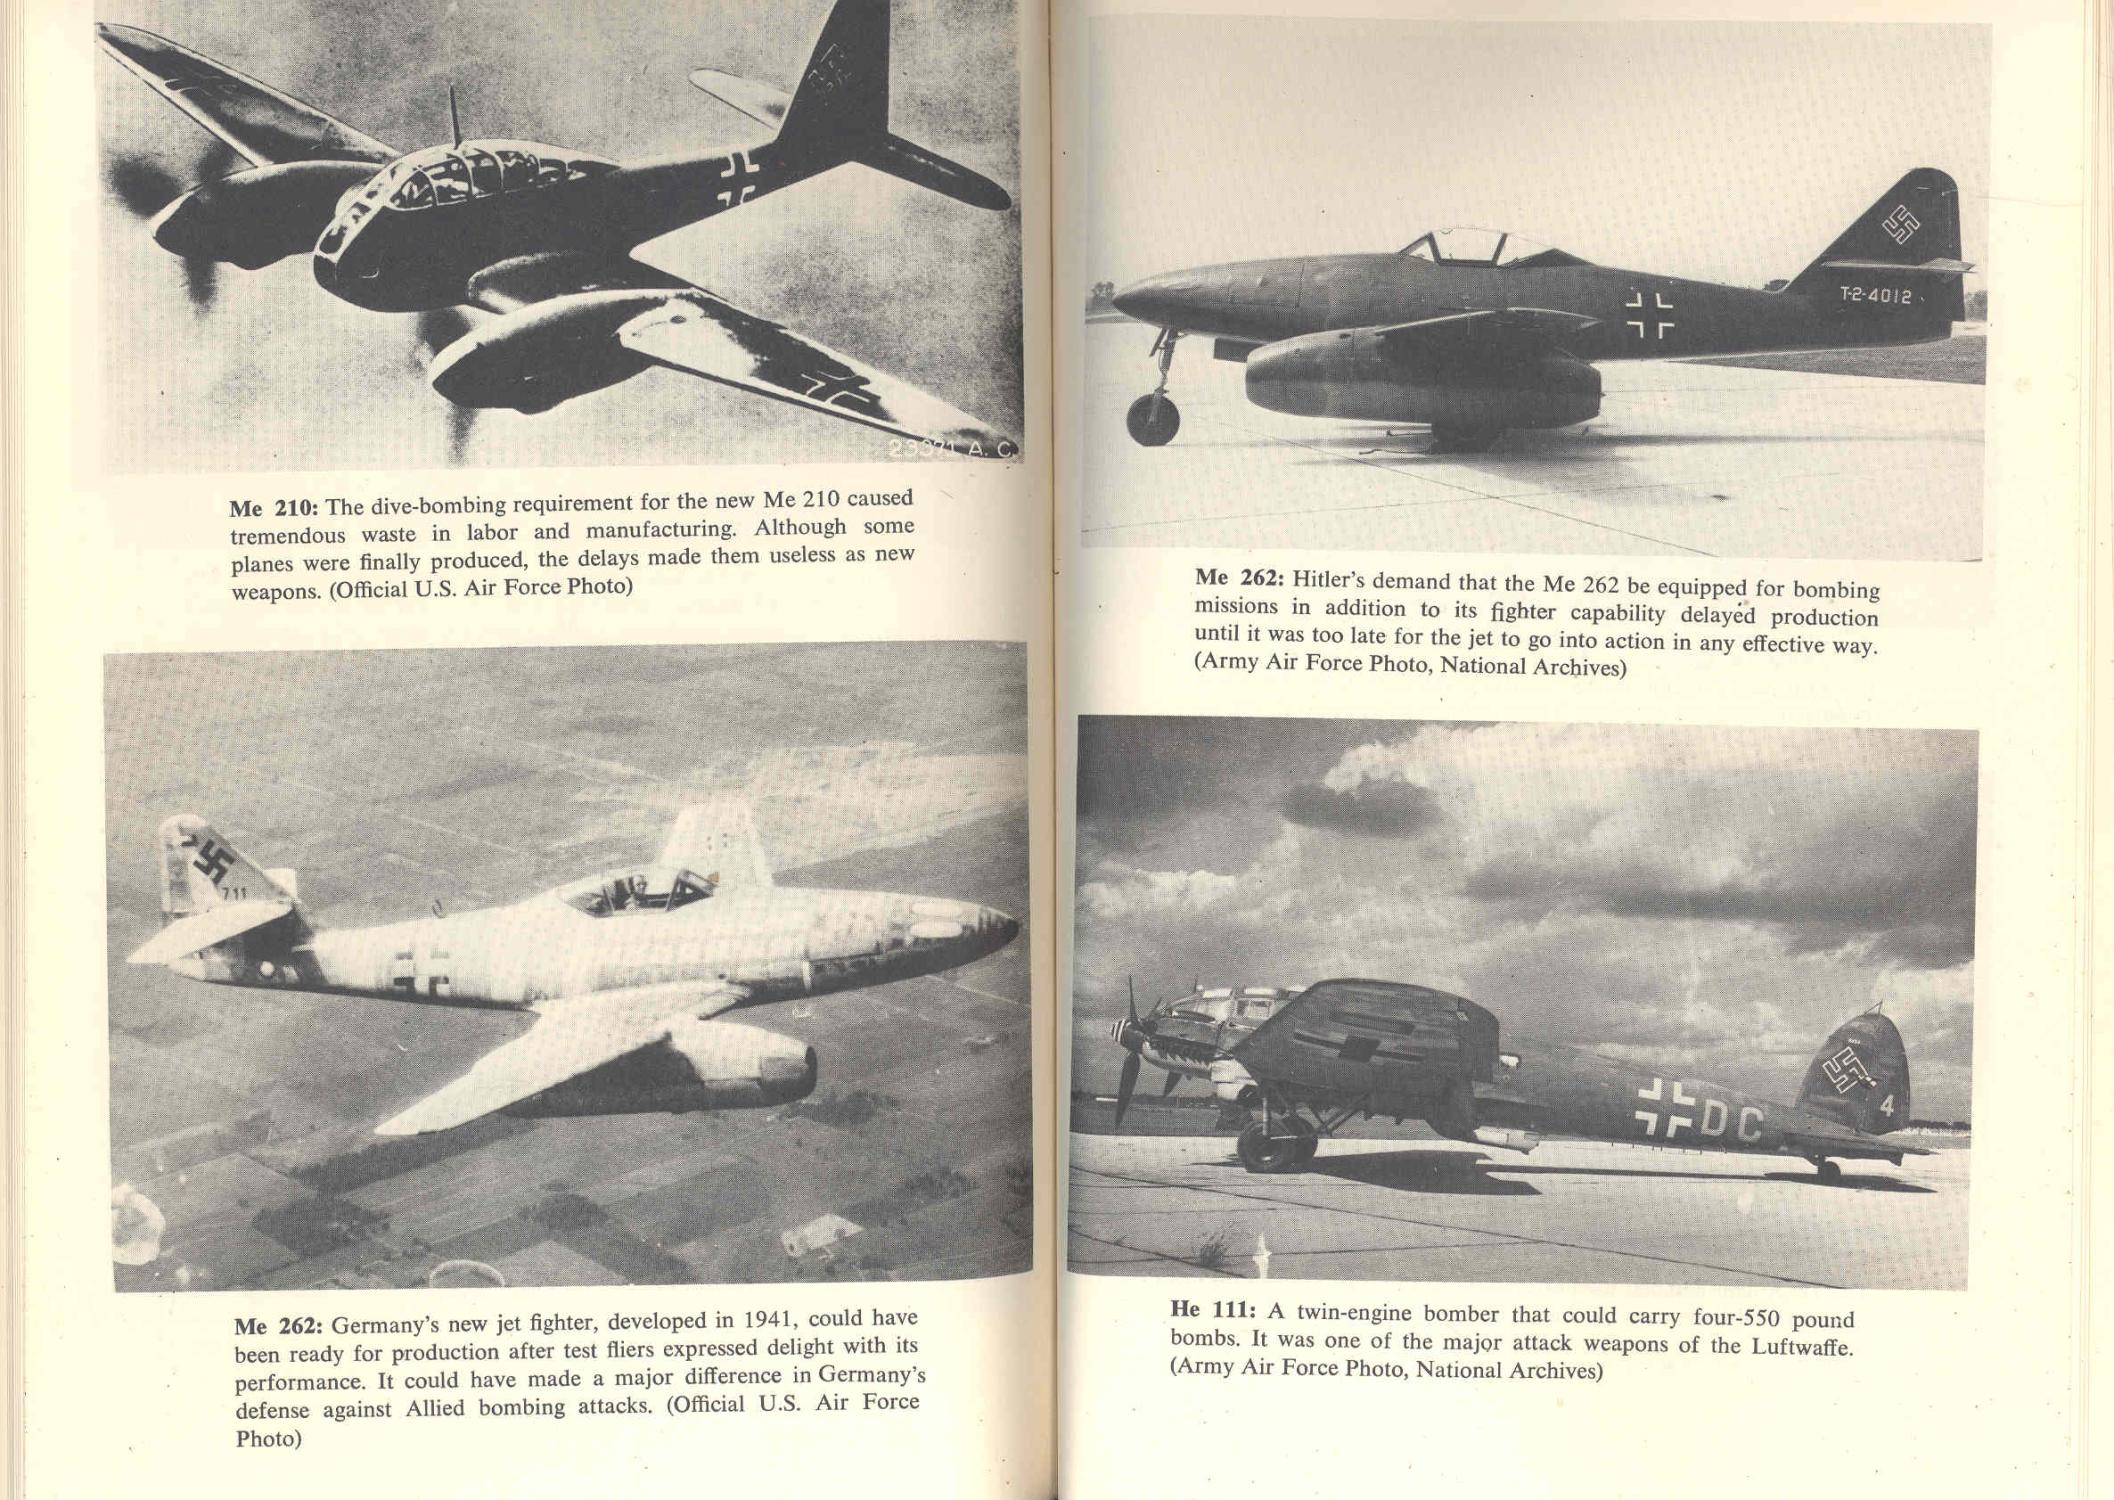 Luftwaffe: a history